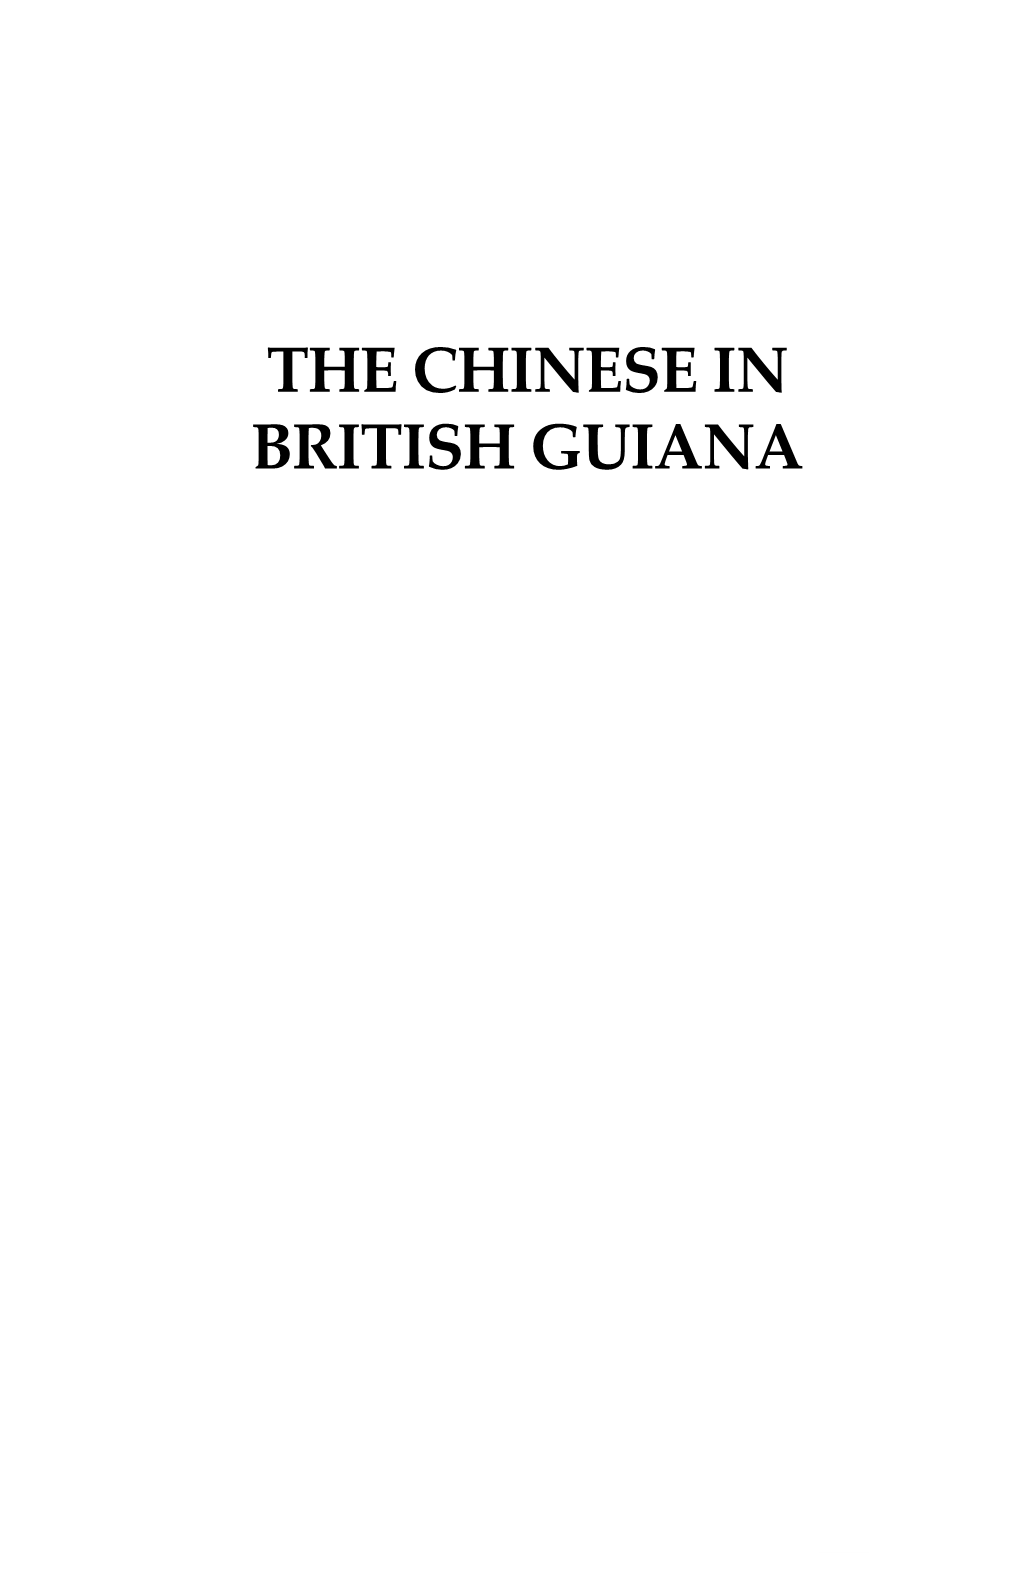 The Chinese in British Guiana